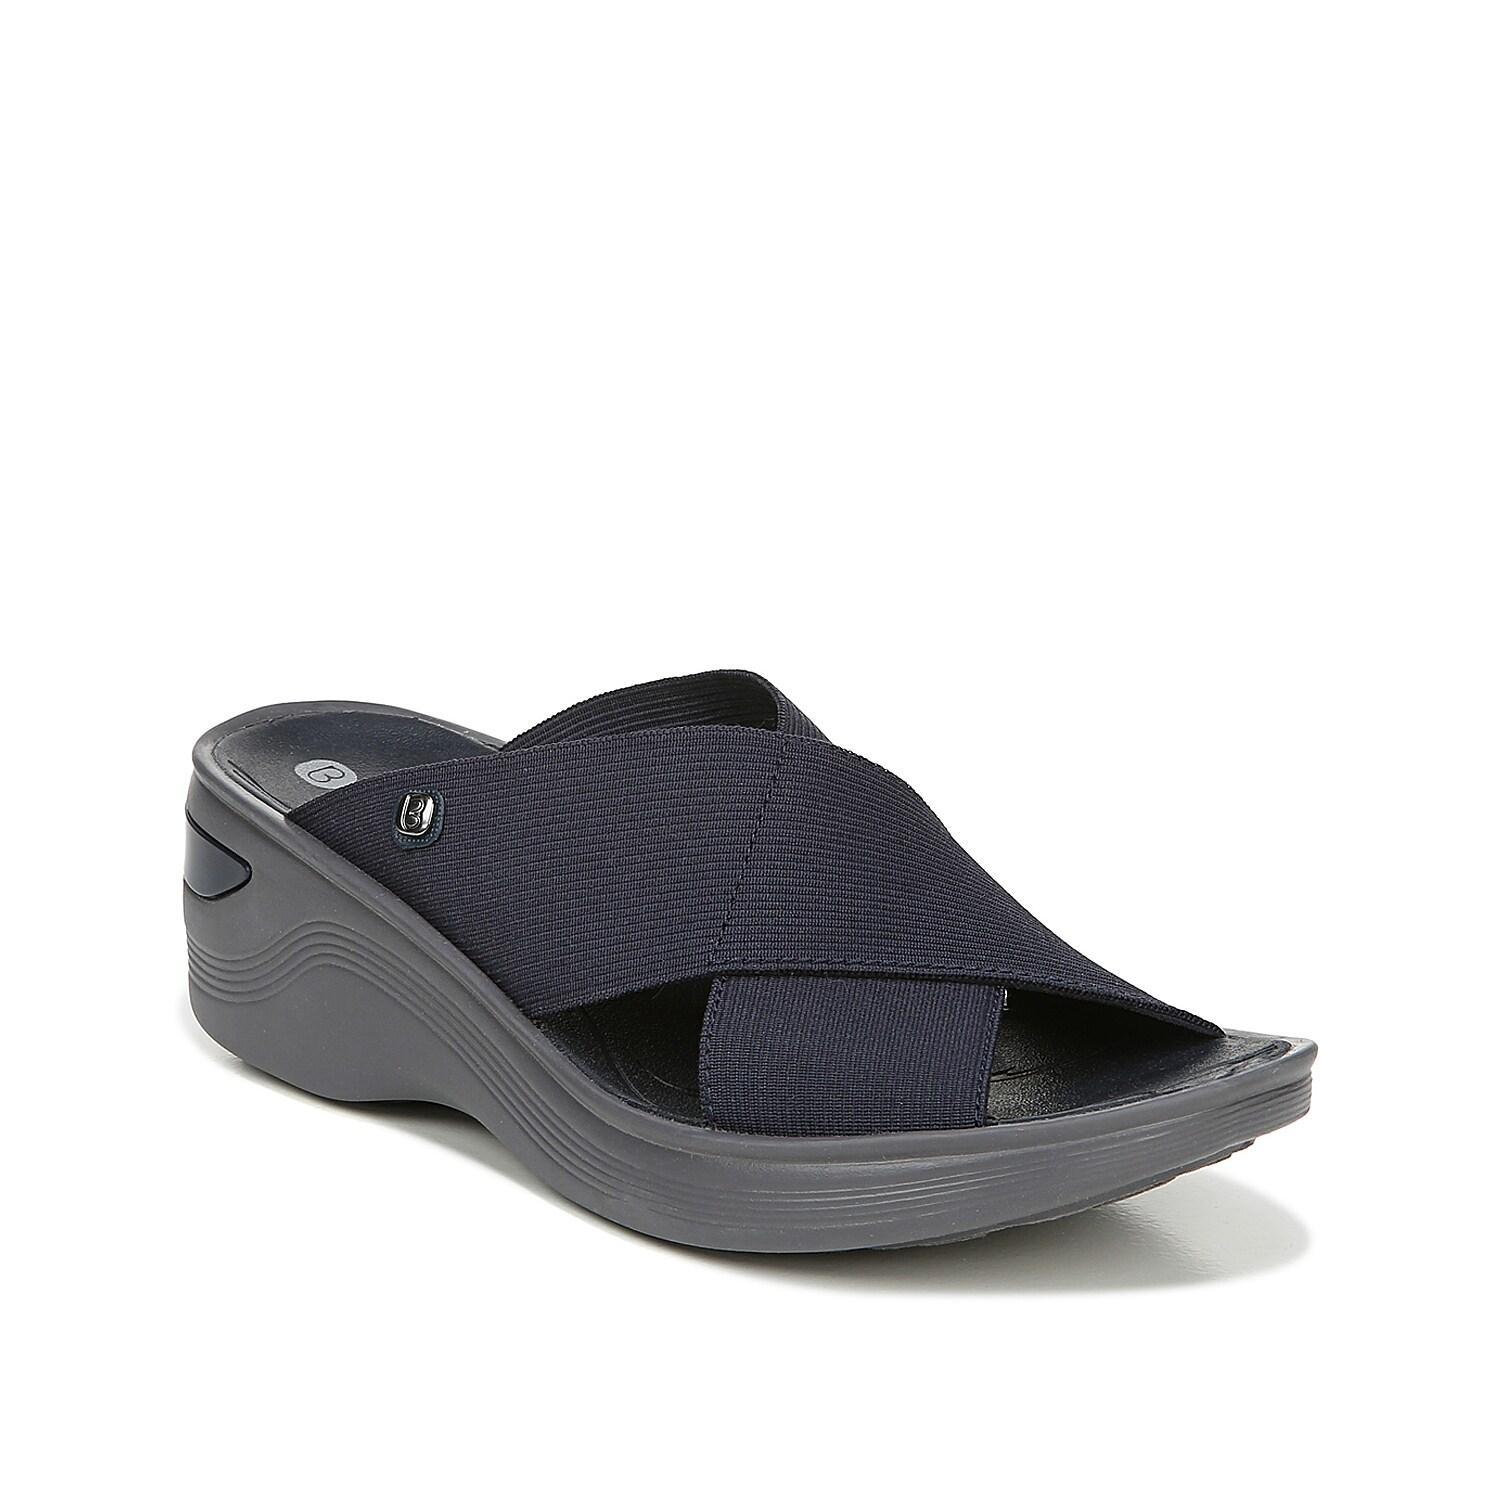 BZees Desire Slide Sandal Product Image